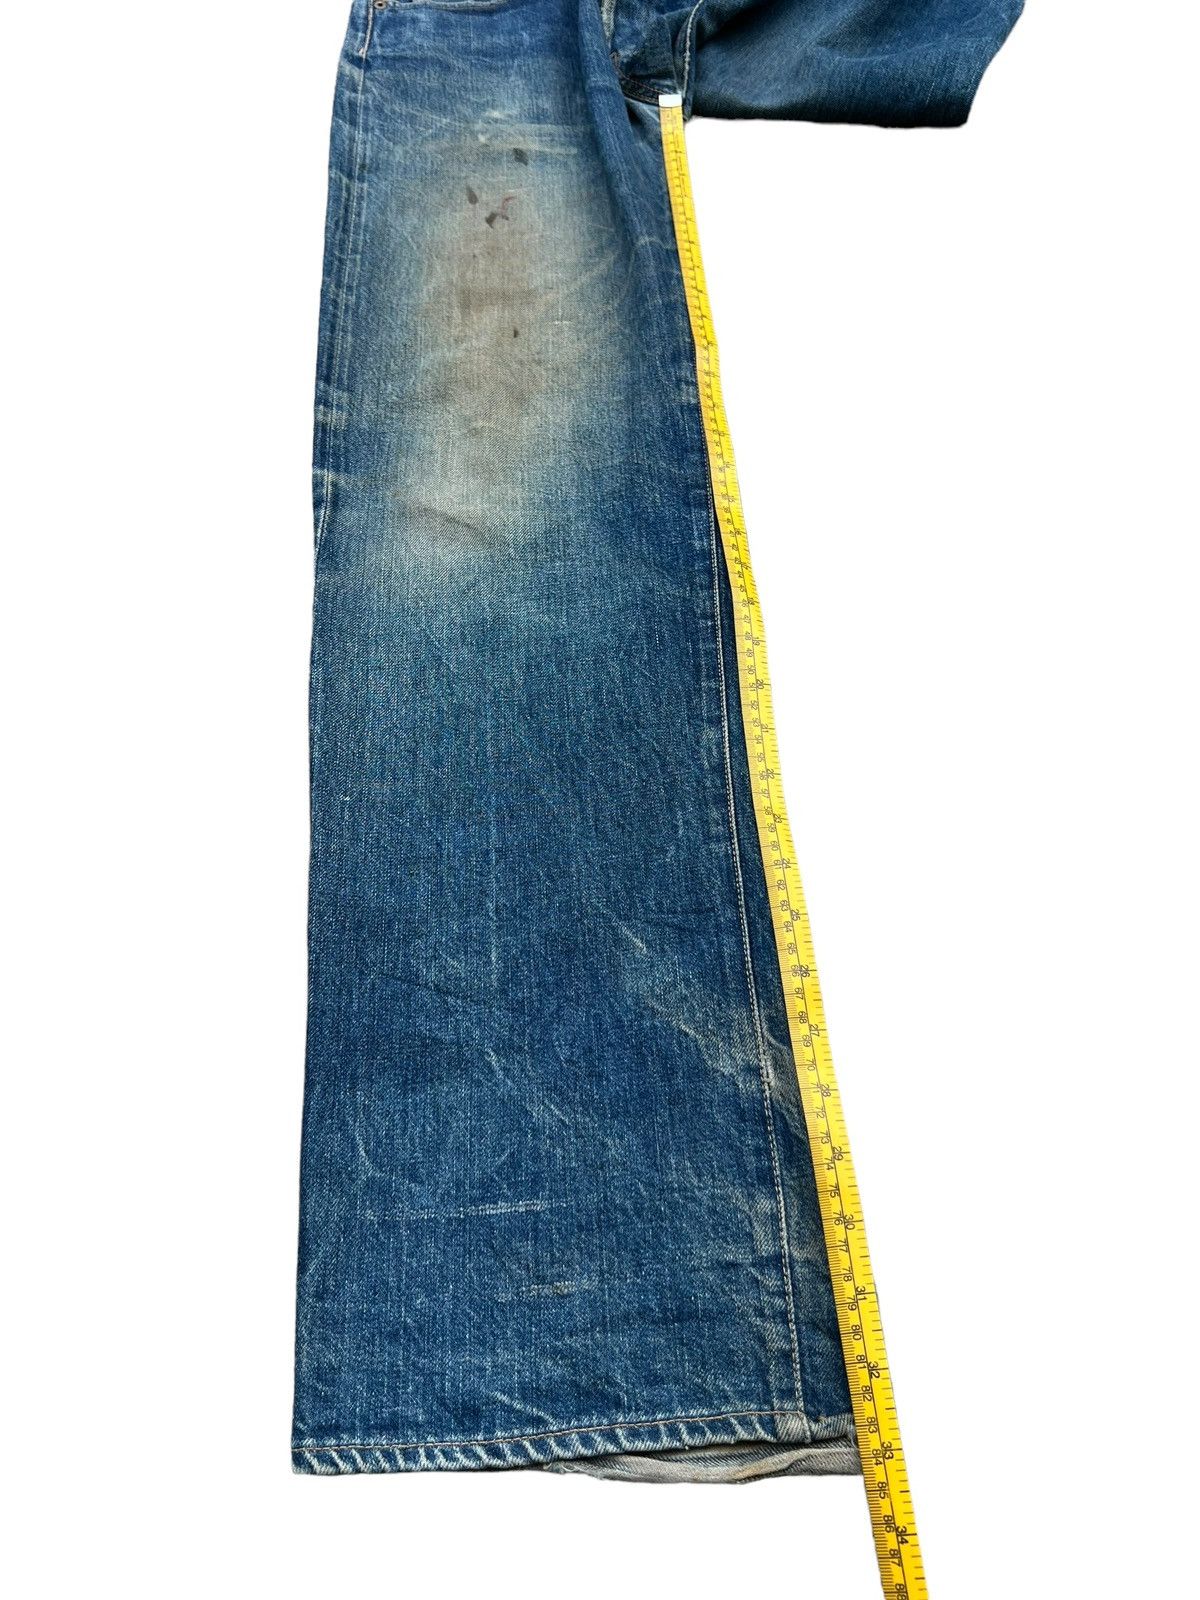 Vtg Beams Plus Japan Selvedge Distressed Mudwash Denim Jeans - 17